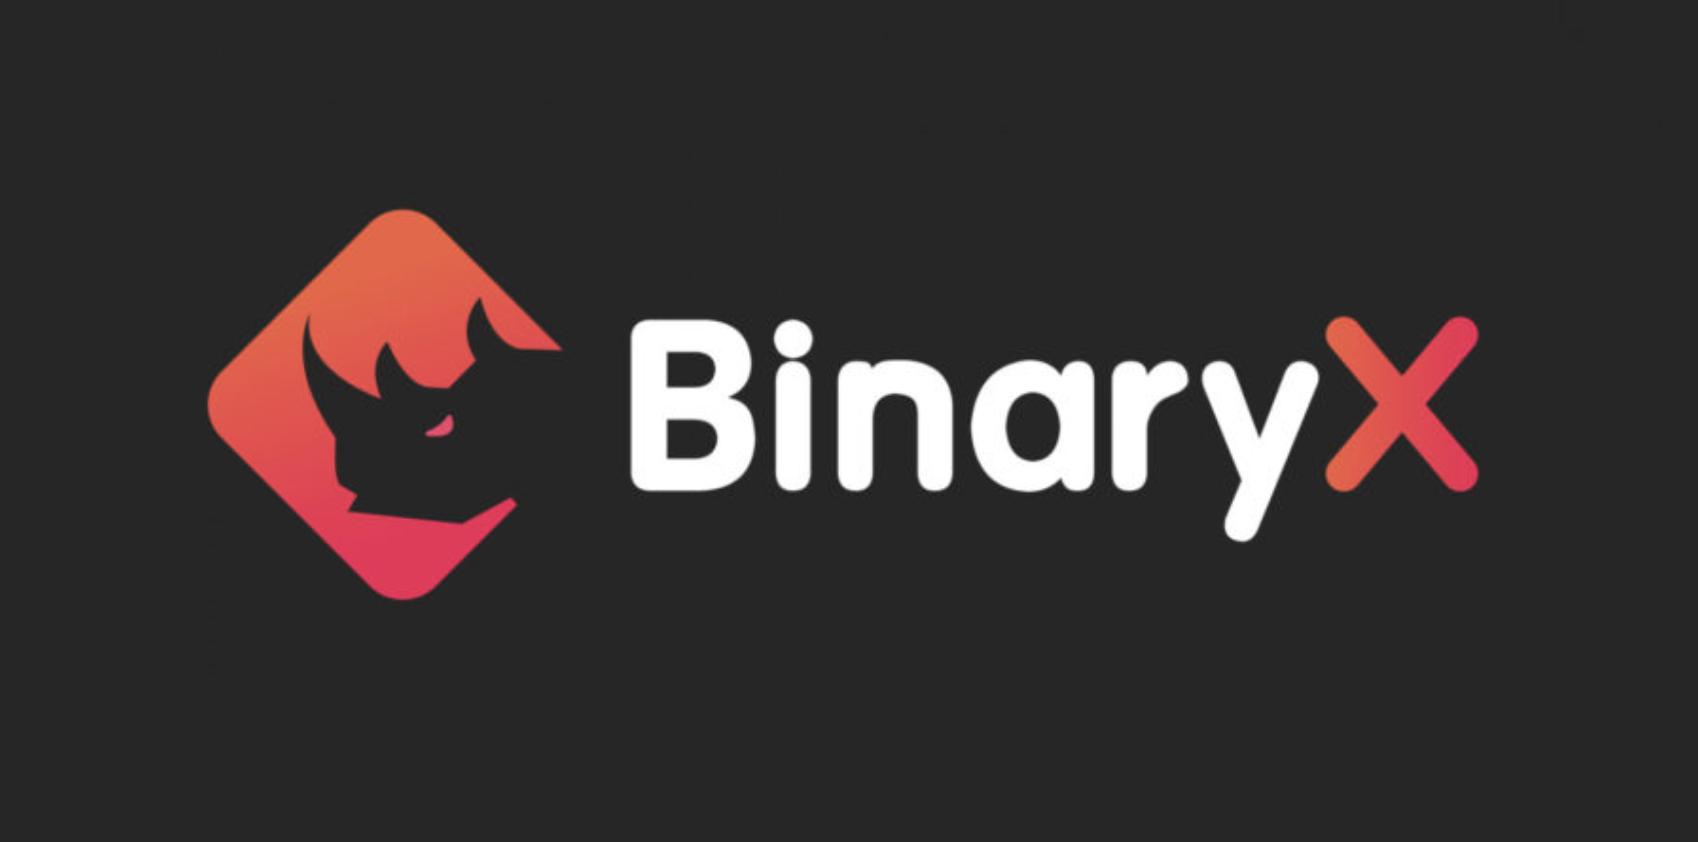 BinaryX 将对 BNX 代币进行 1:100 拆分，旨在提高人群采用率